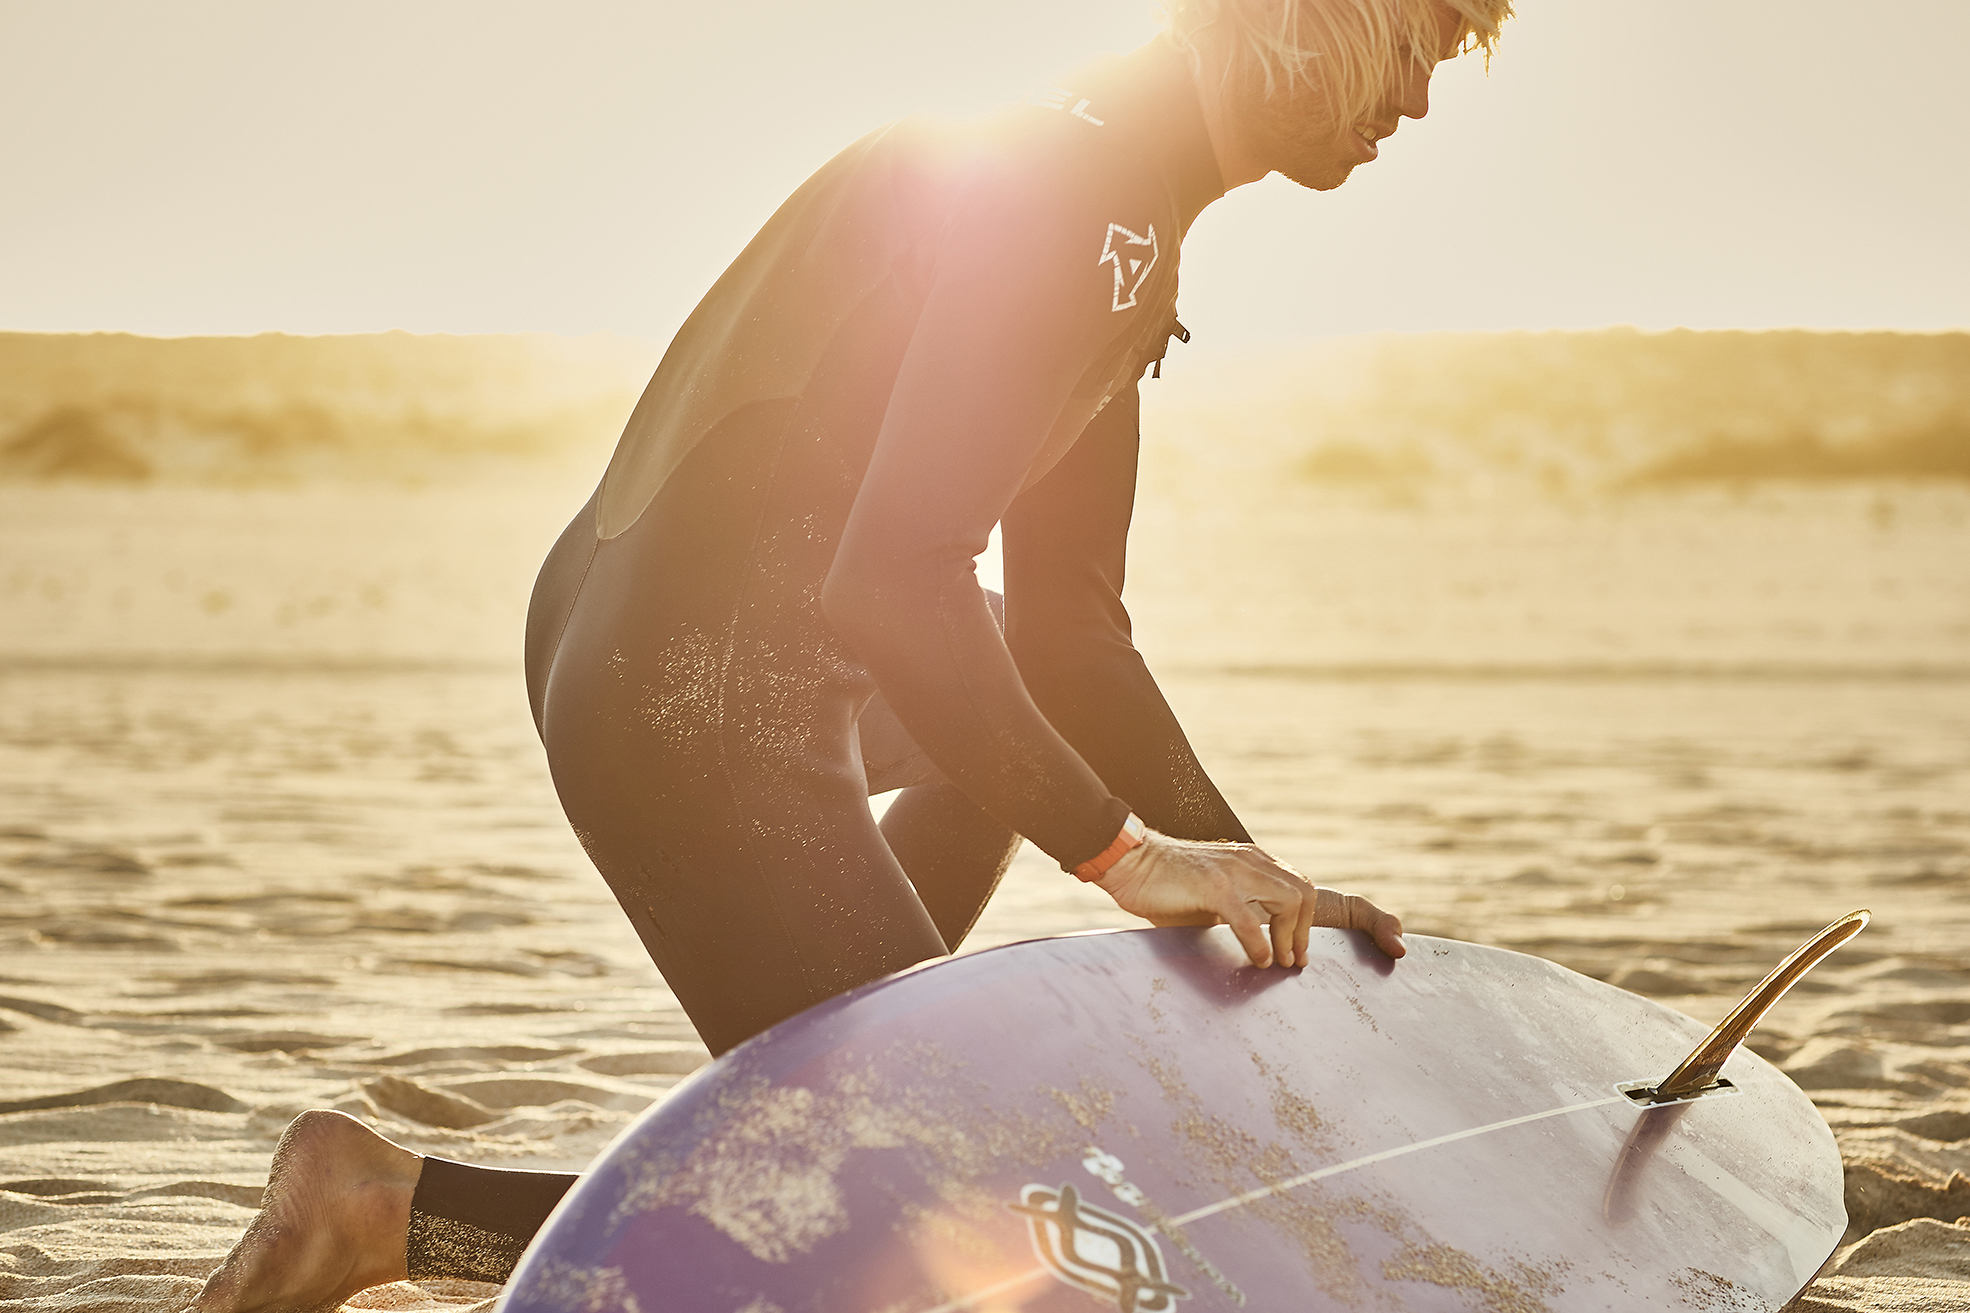 surfer waxing his board at sunset